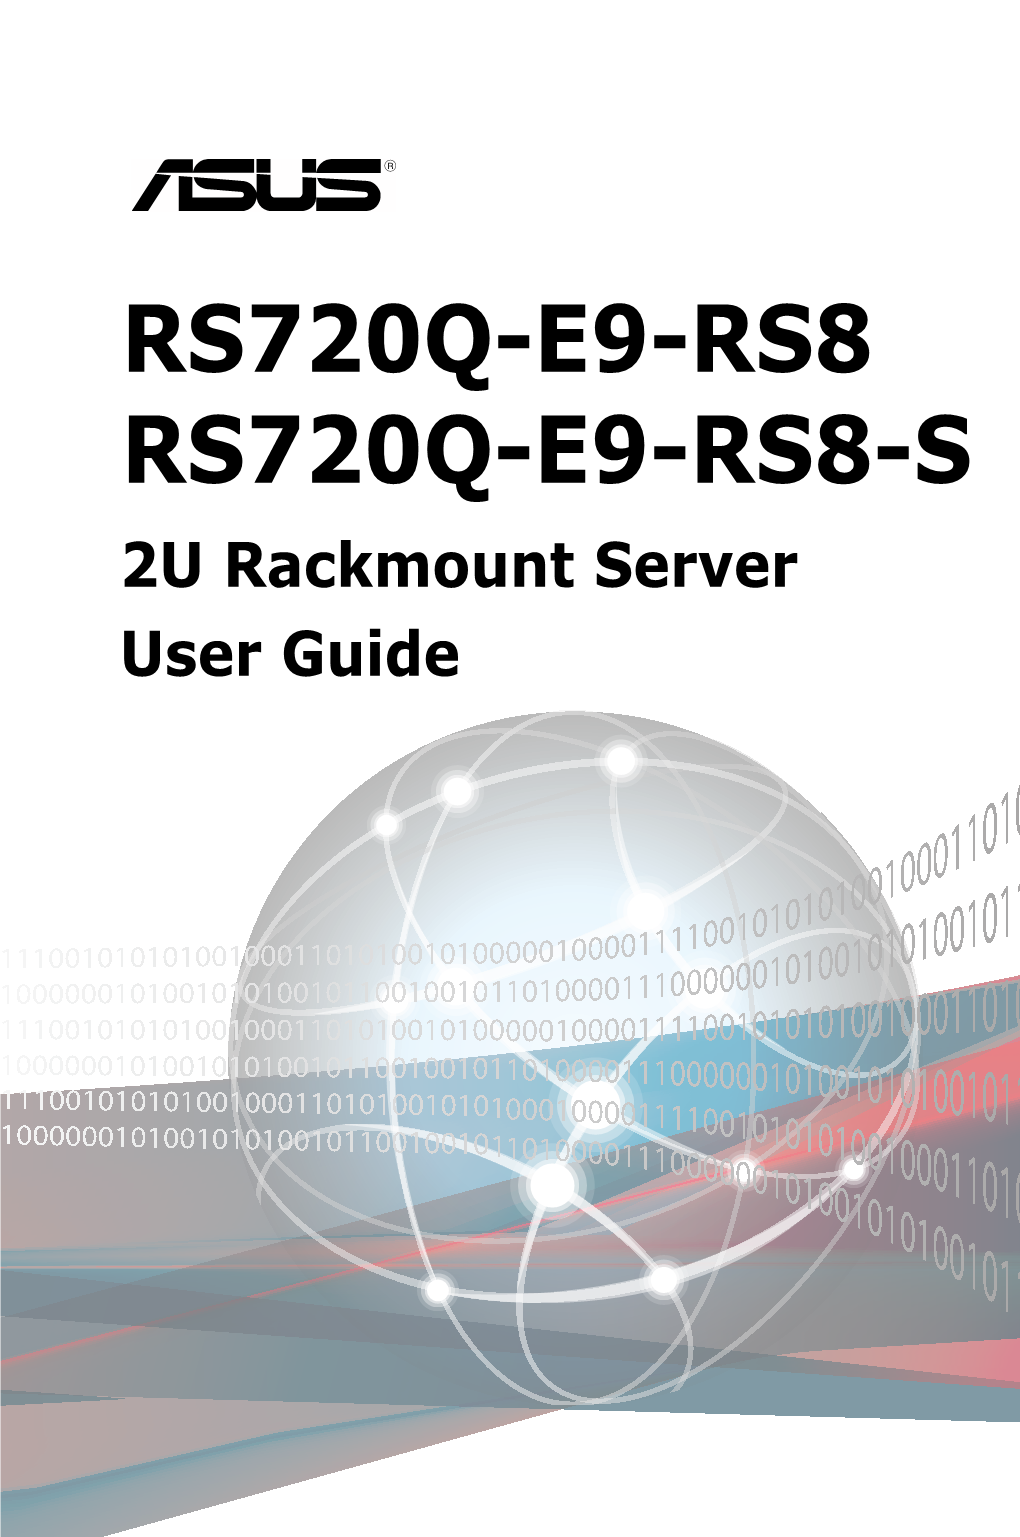 RS720Q-E9-RS8 RS720Q-E9-RS8-S 2U Rackmount Server User Guide E14968 Revised Edition V2 November 2018